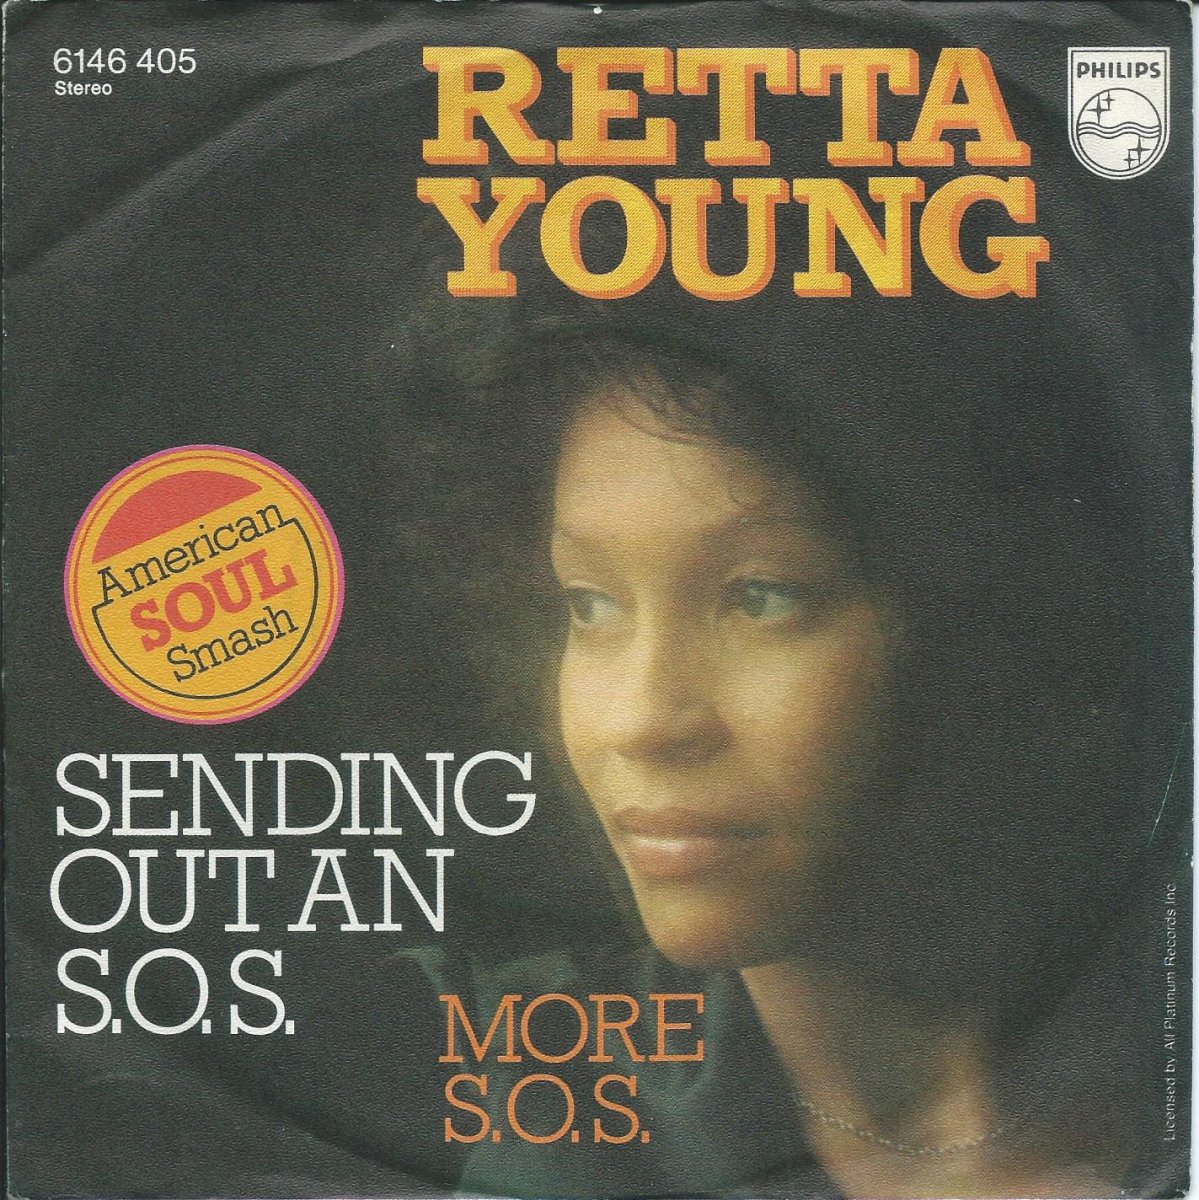 RETTA YOUNG / SENDING OUT AN S.O.S. / MORE S.O.S. (7